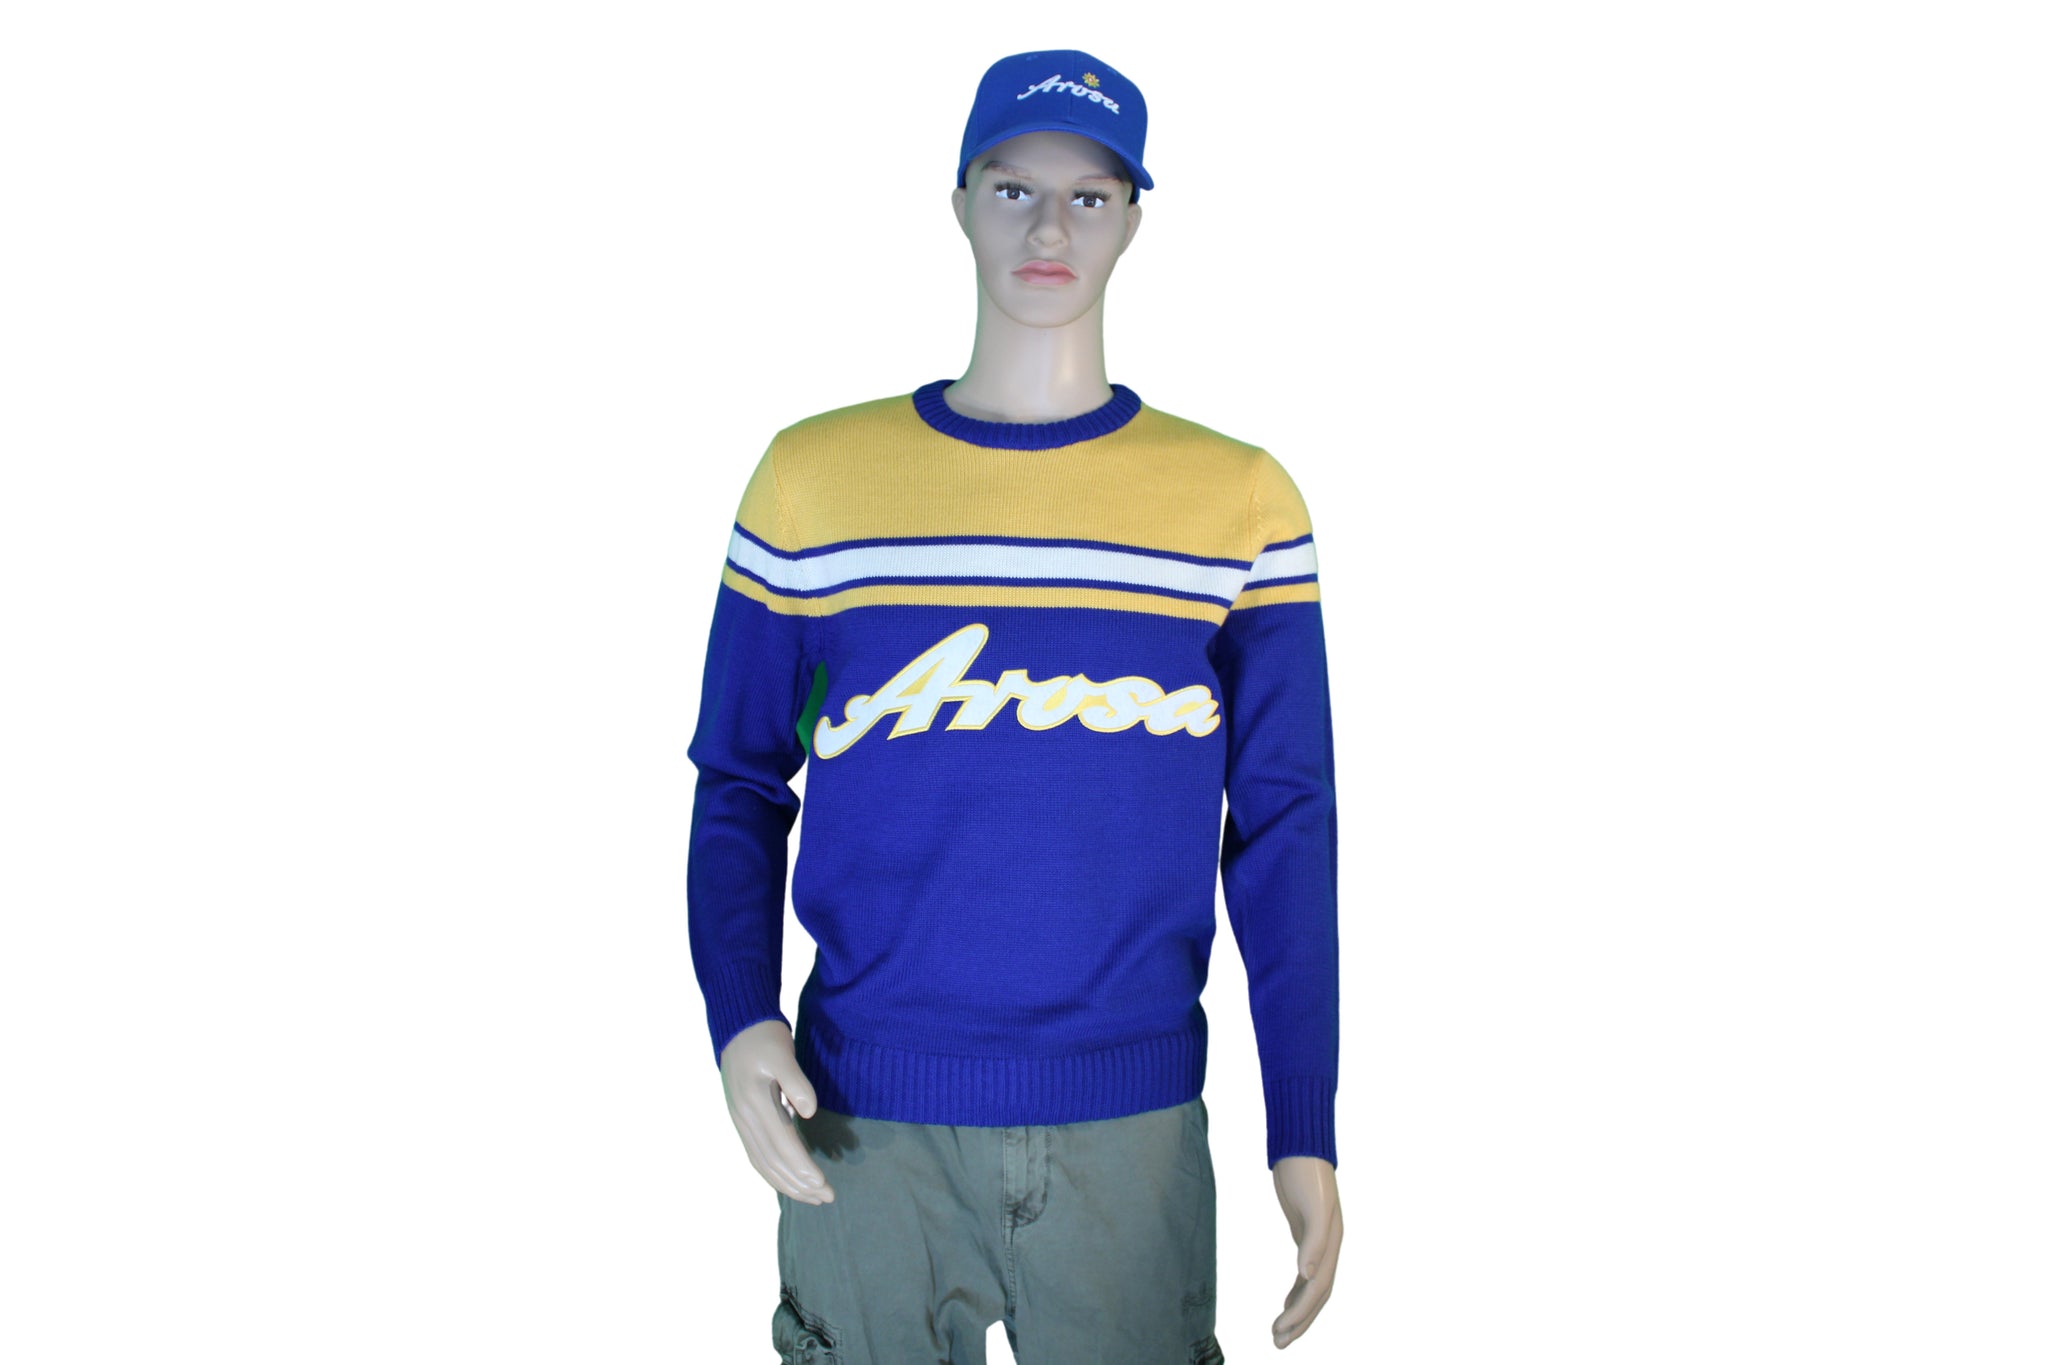 Arosa retro sweater